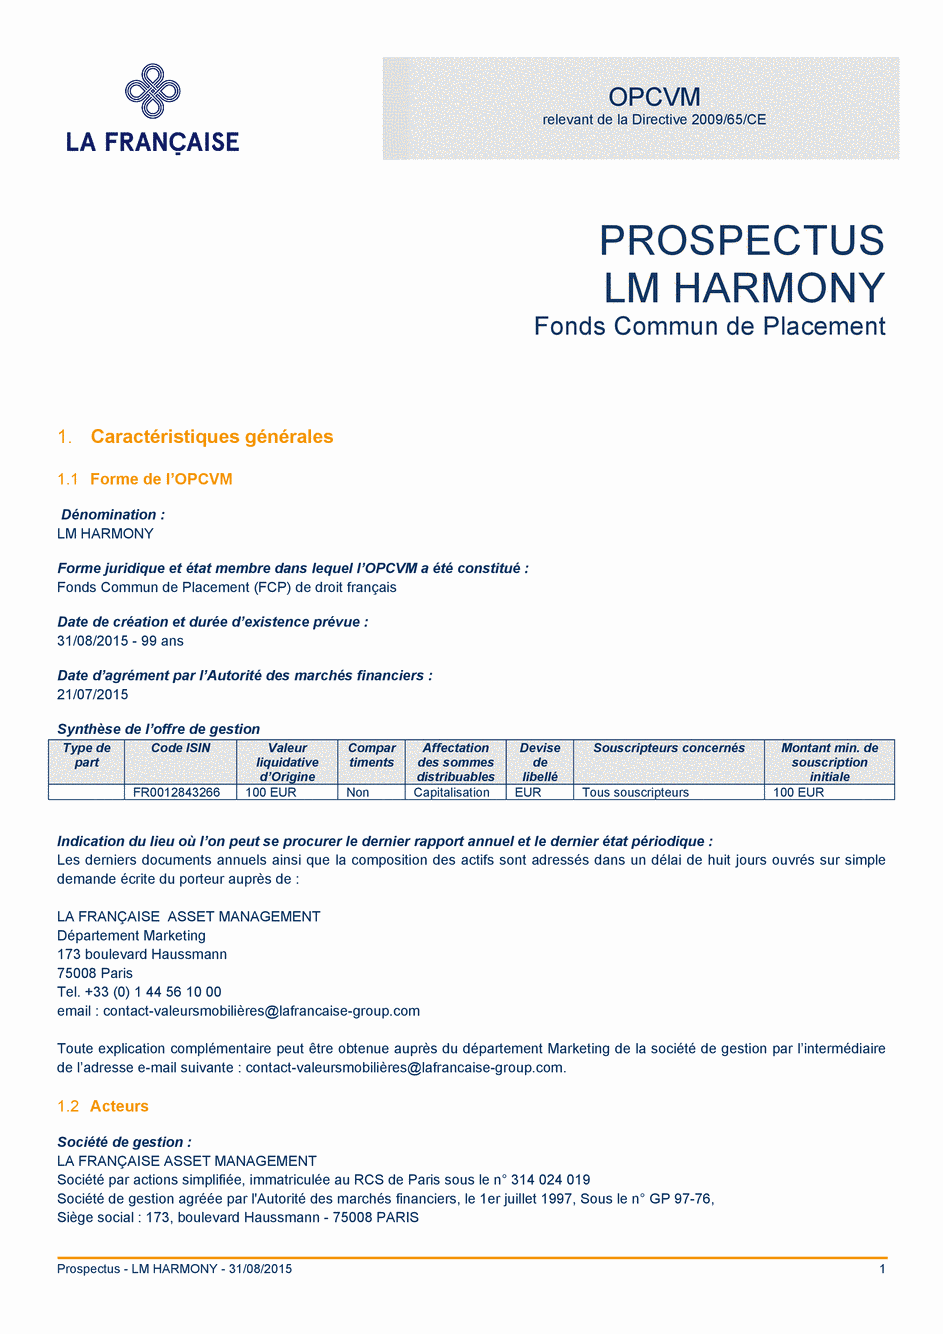 Prospectus LM Harmony - 31/08/2015 - Français